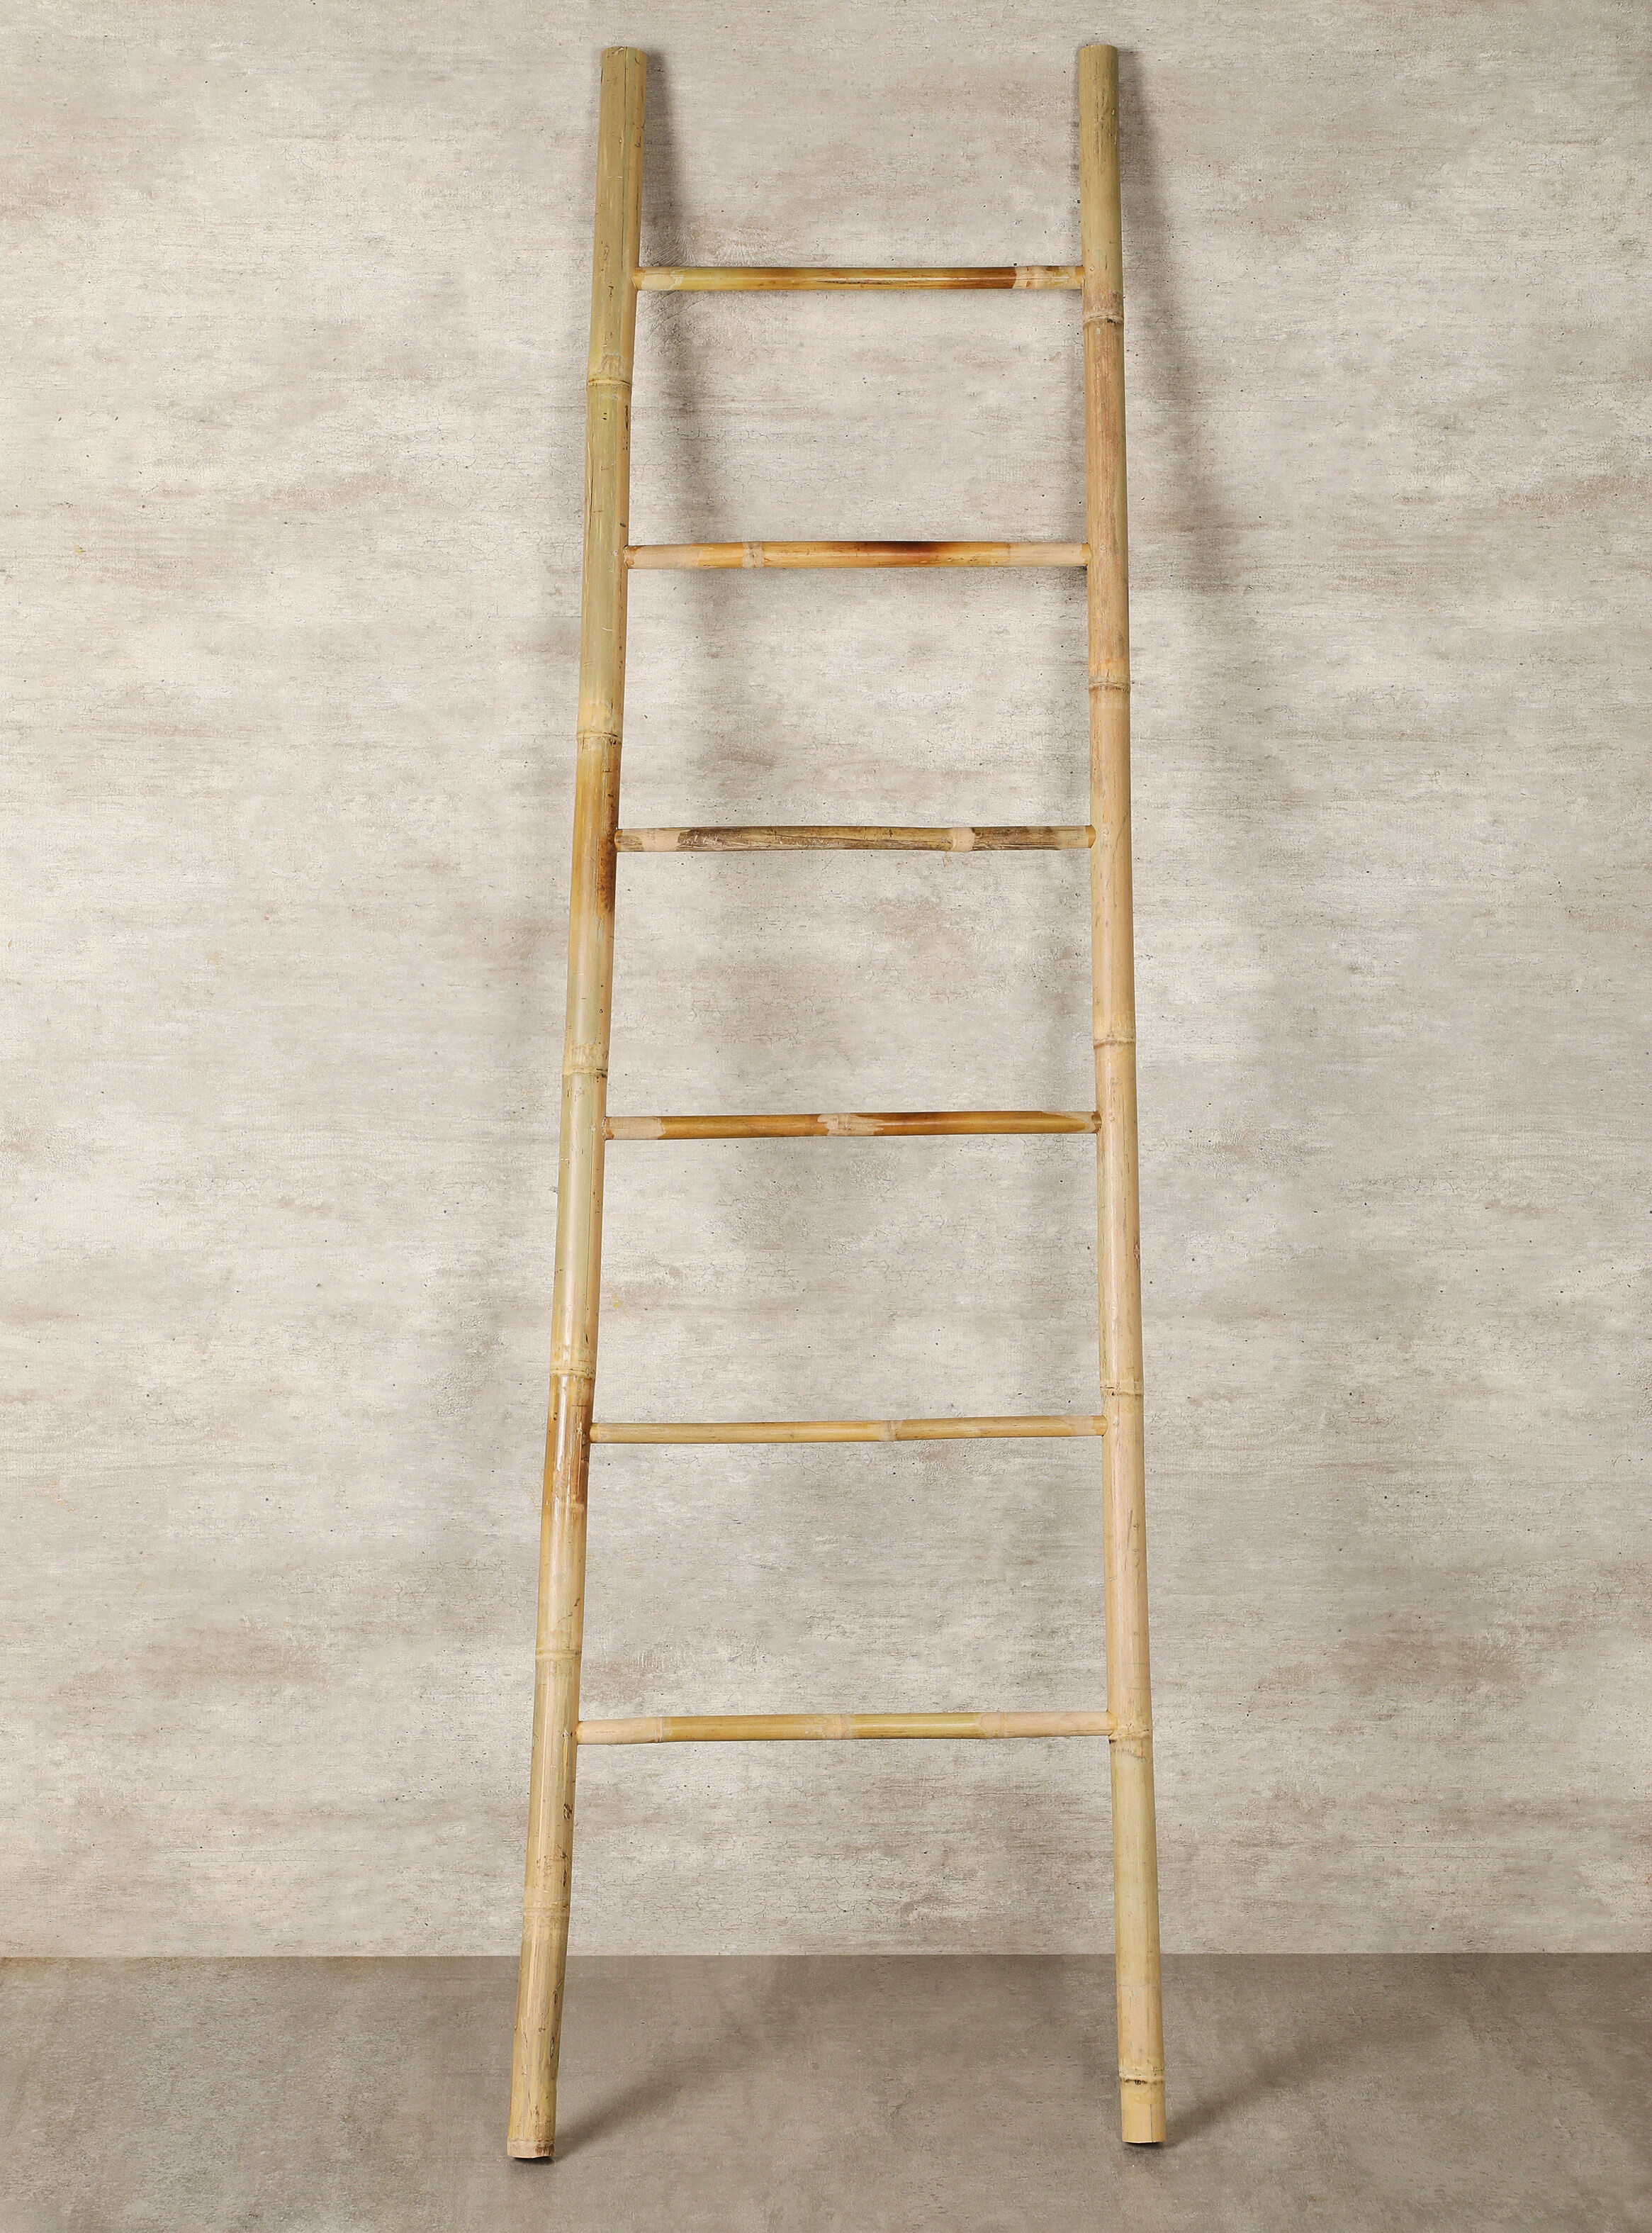 Escalera Decorativa Bamboo 180 cm - Adornos